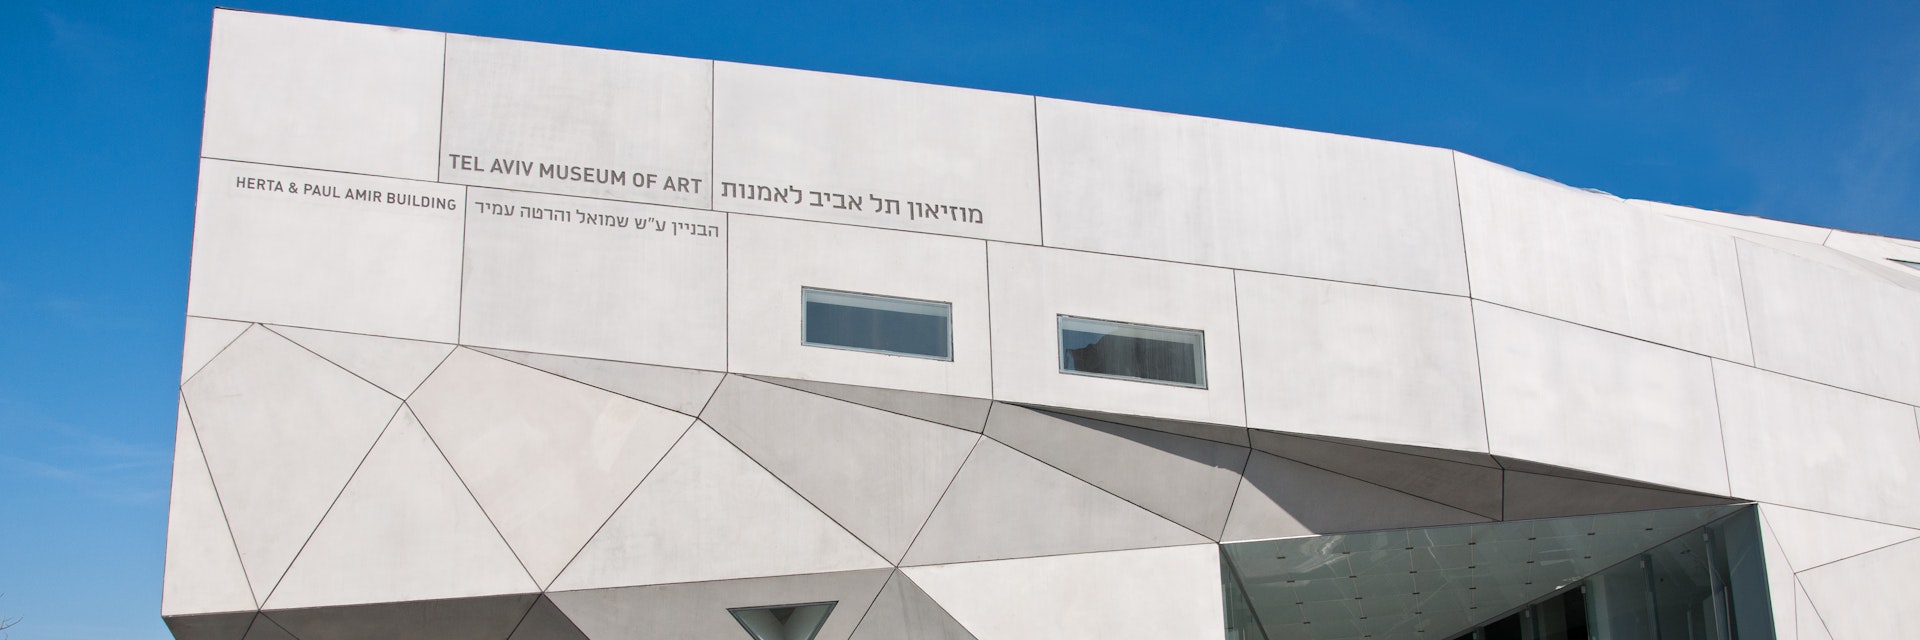 Tel Aviv Museum of Art in Israel